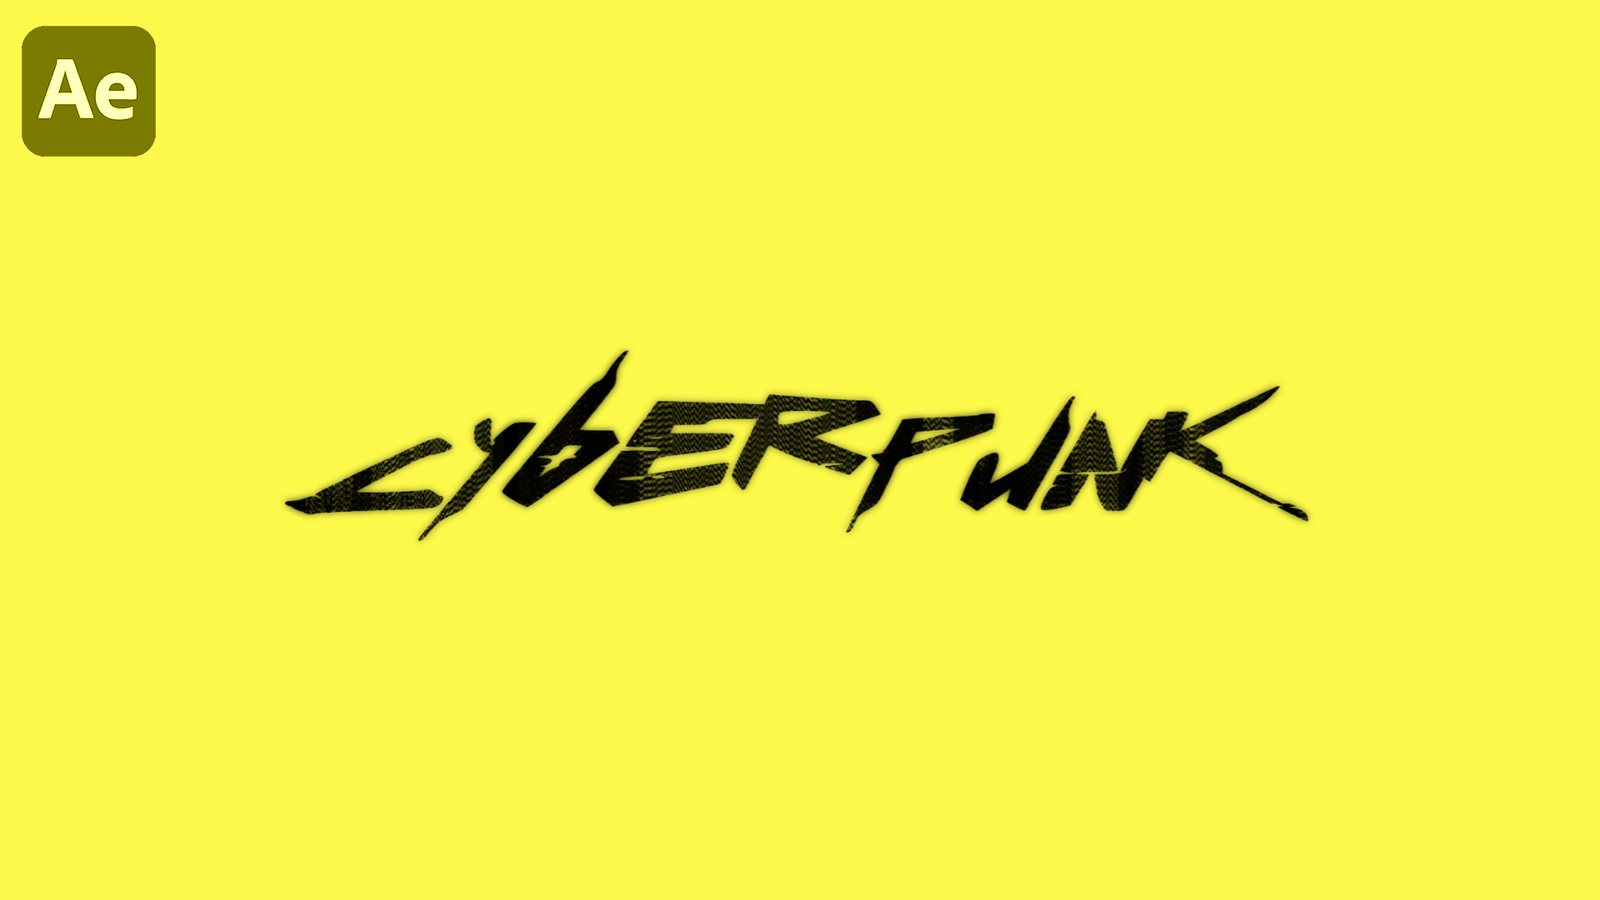 Cyberpunk Inspired Glitch Logo Animation.